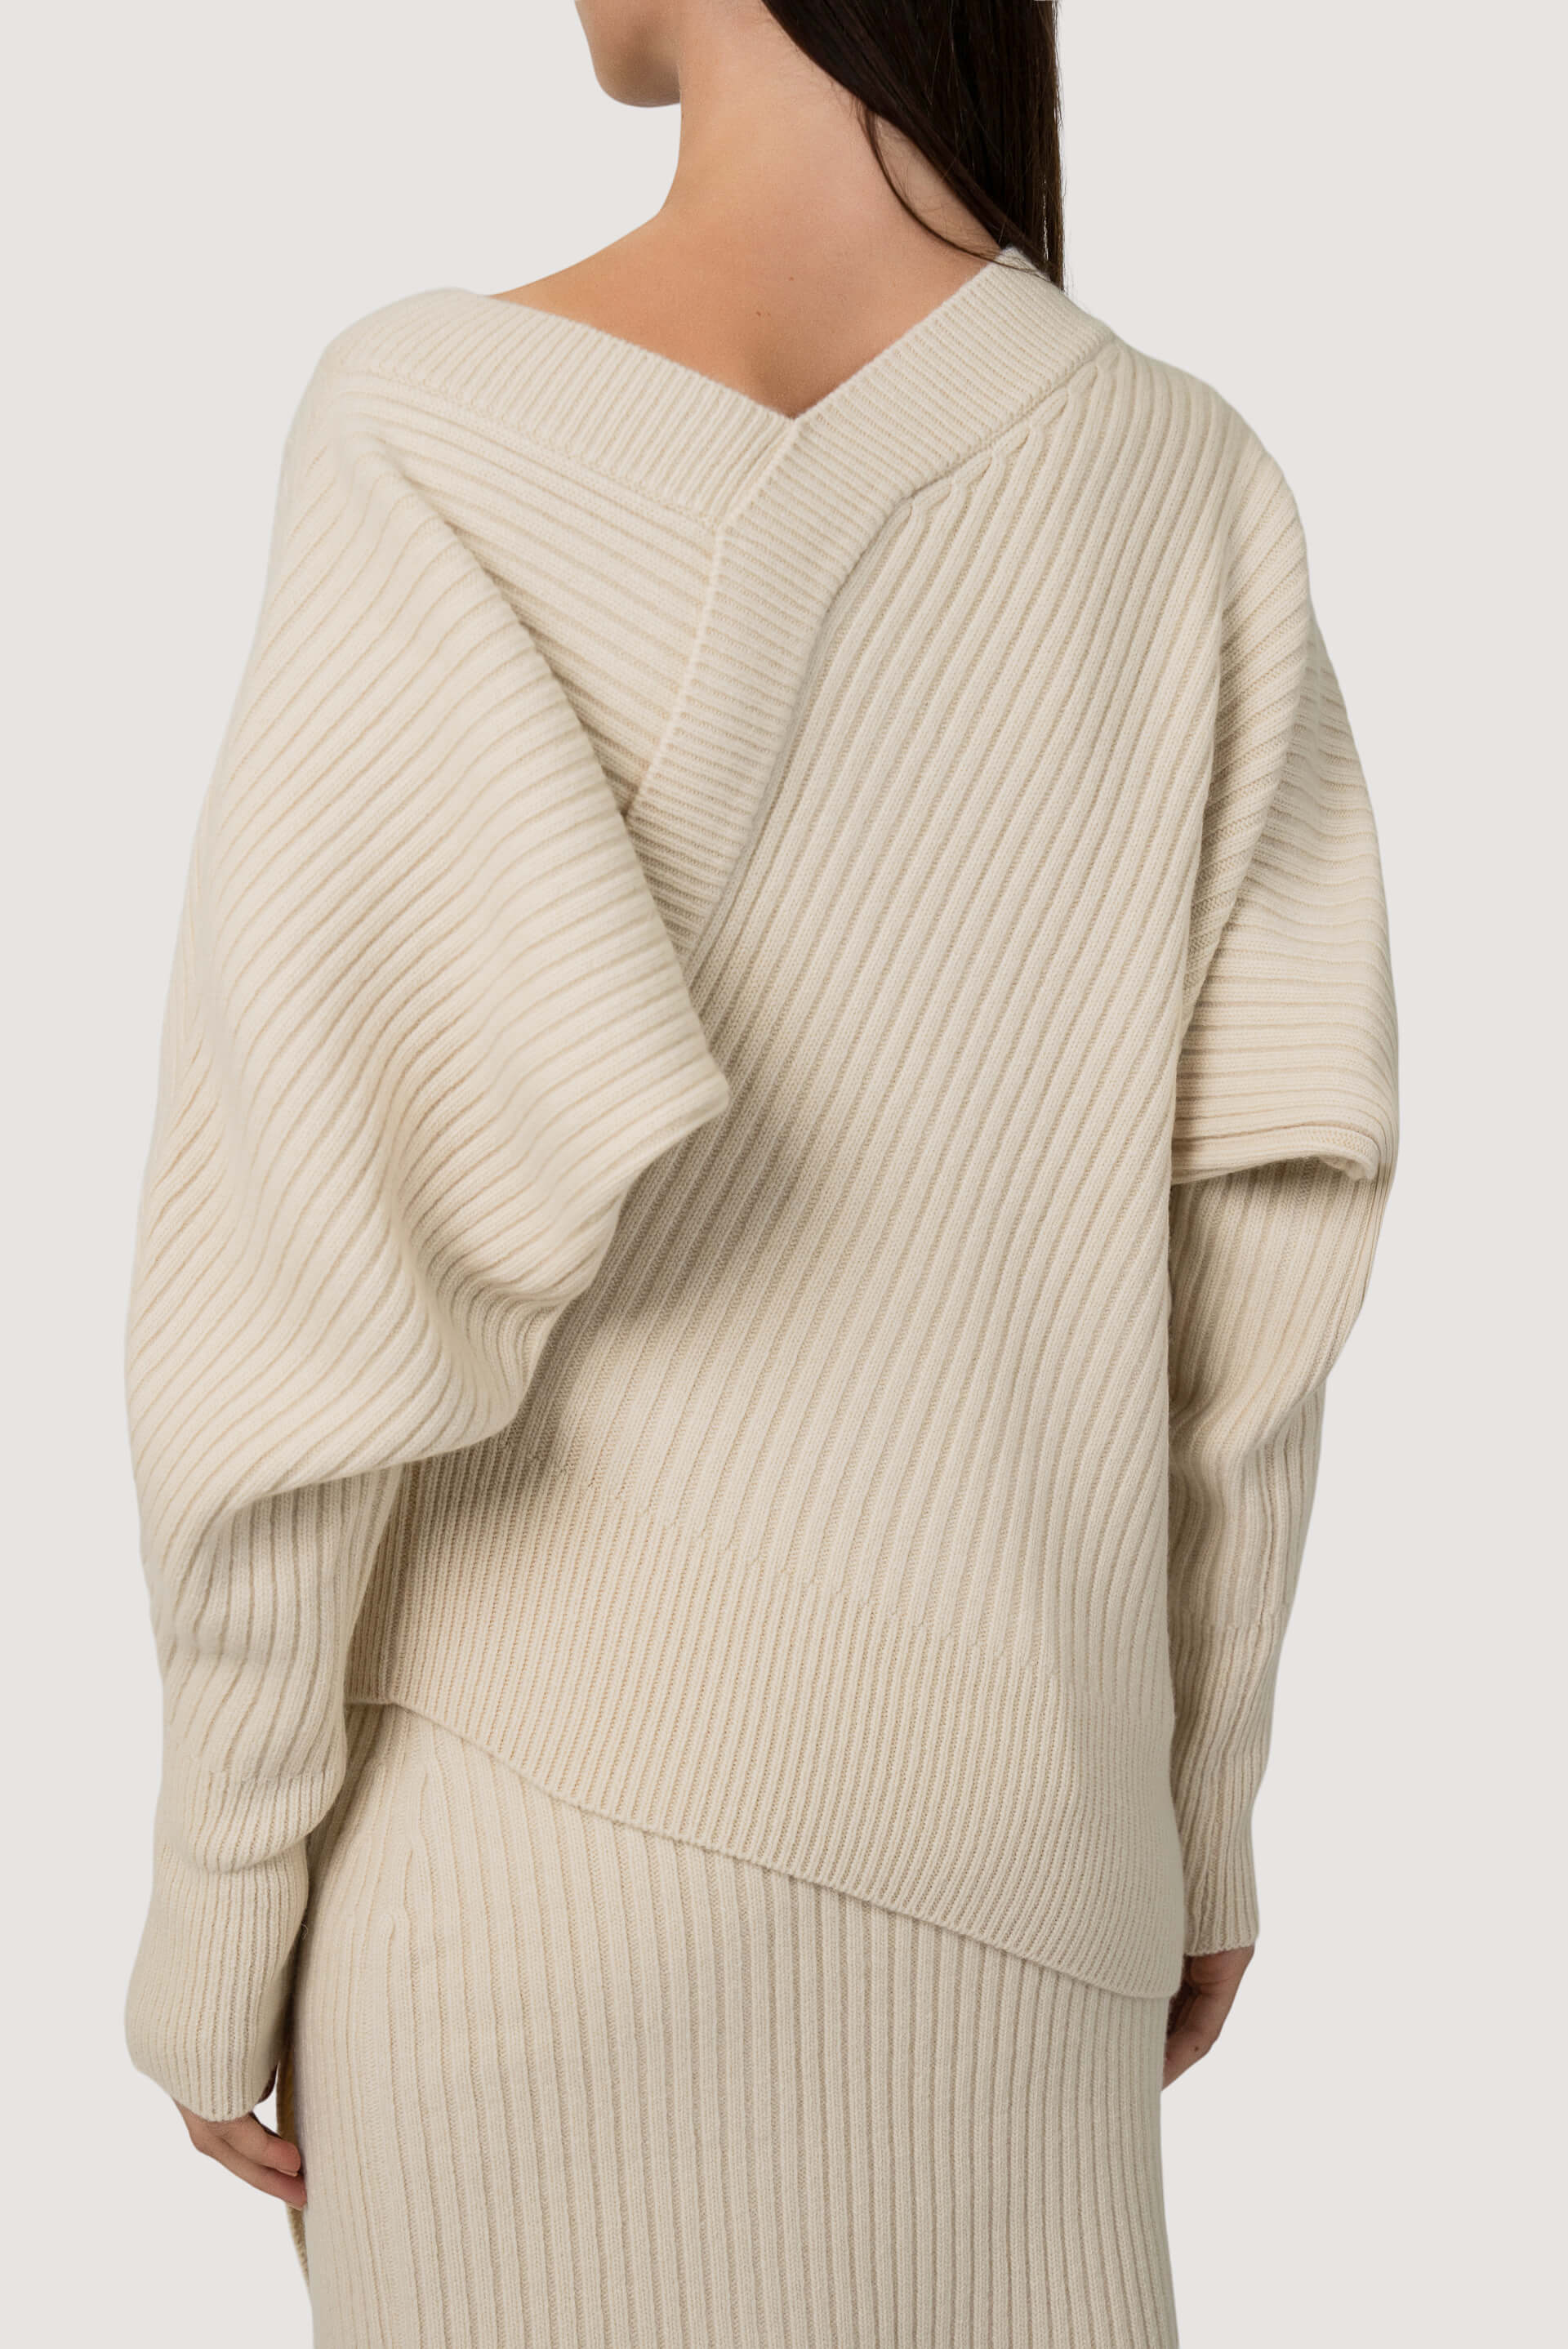 Asymetric sculptural rib knit sweater